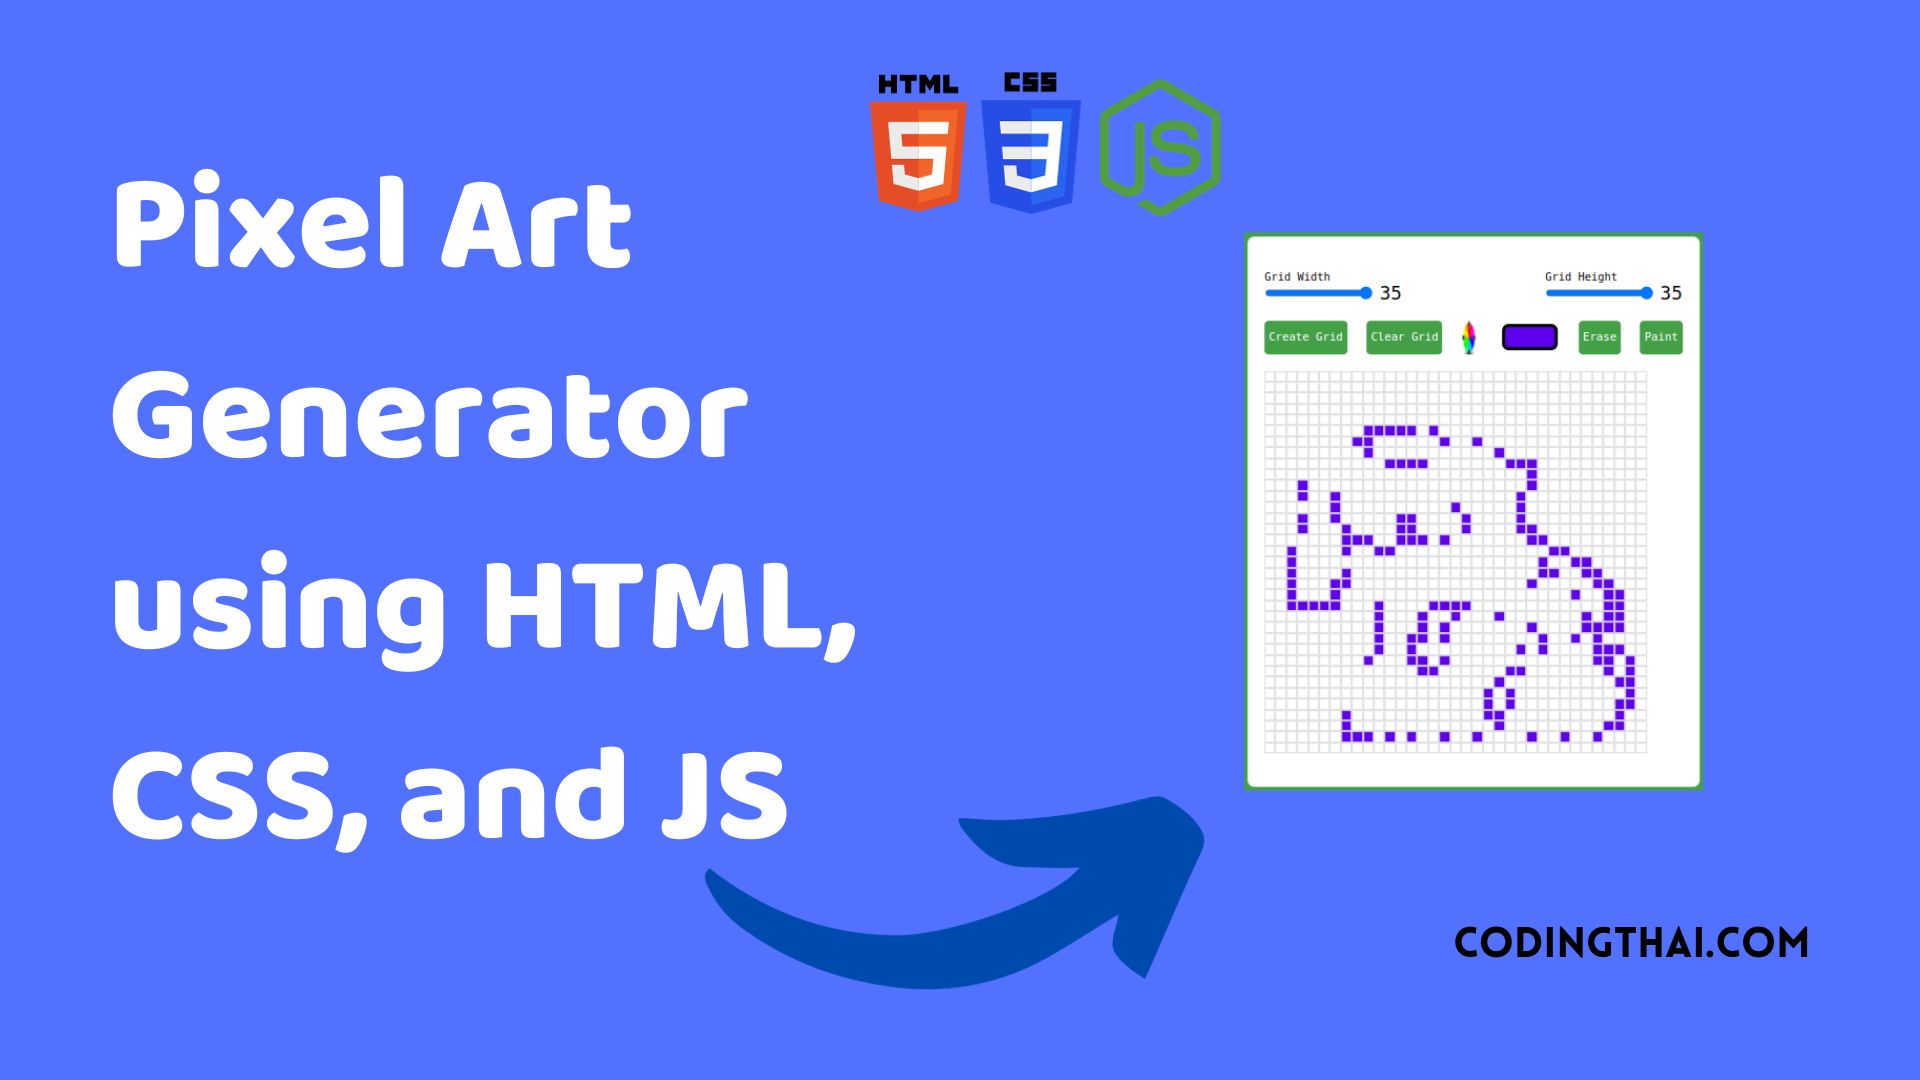 Pixel Art Generator using HTML, CSS, and JS